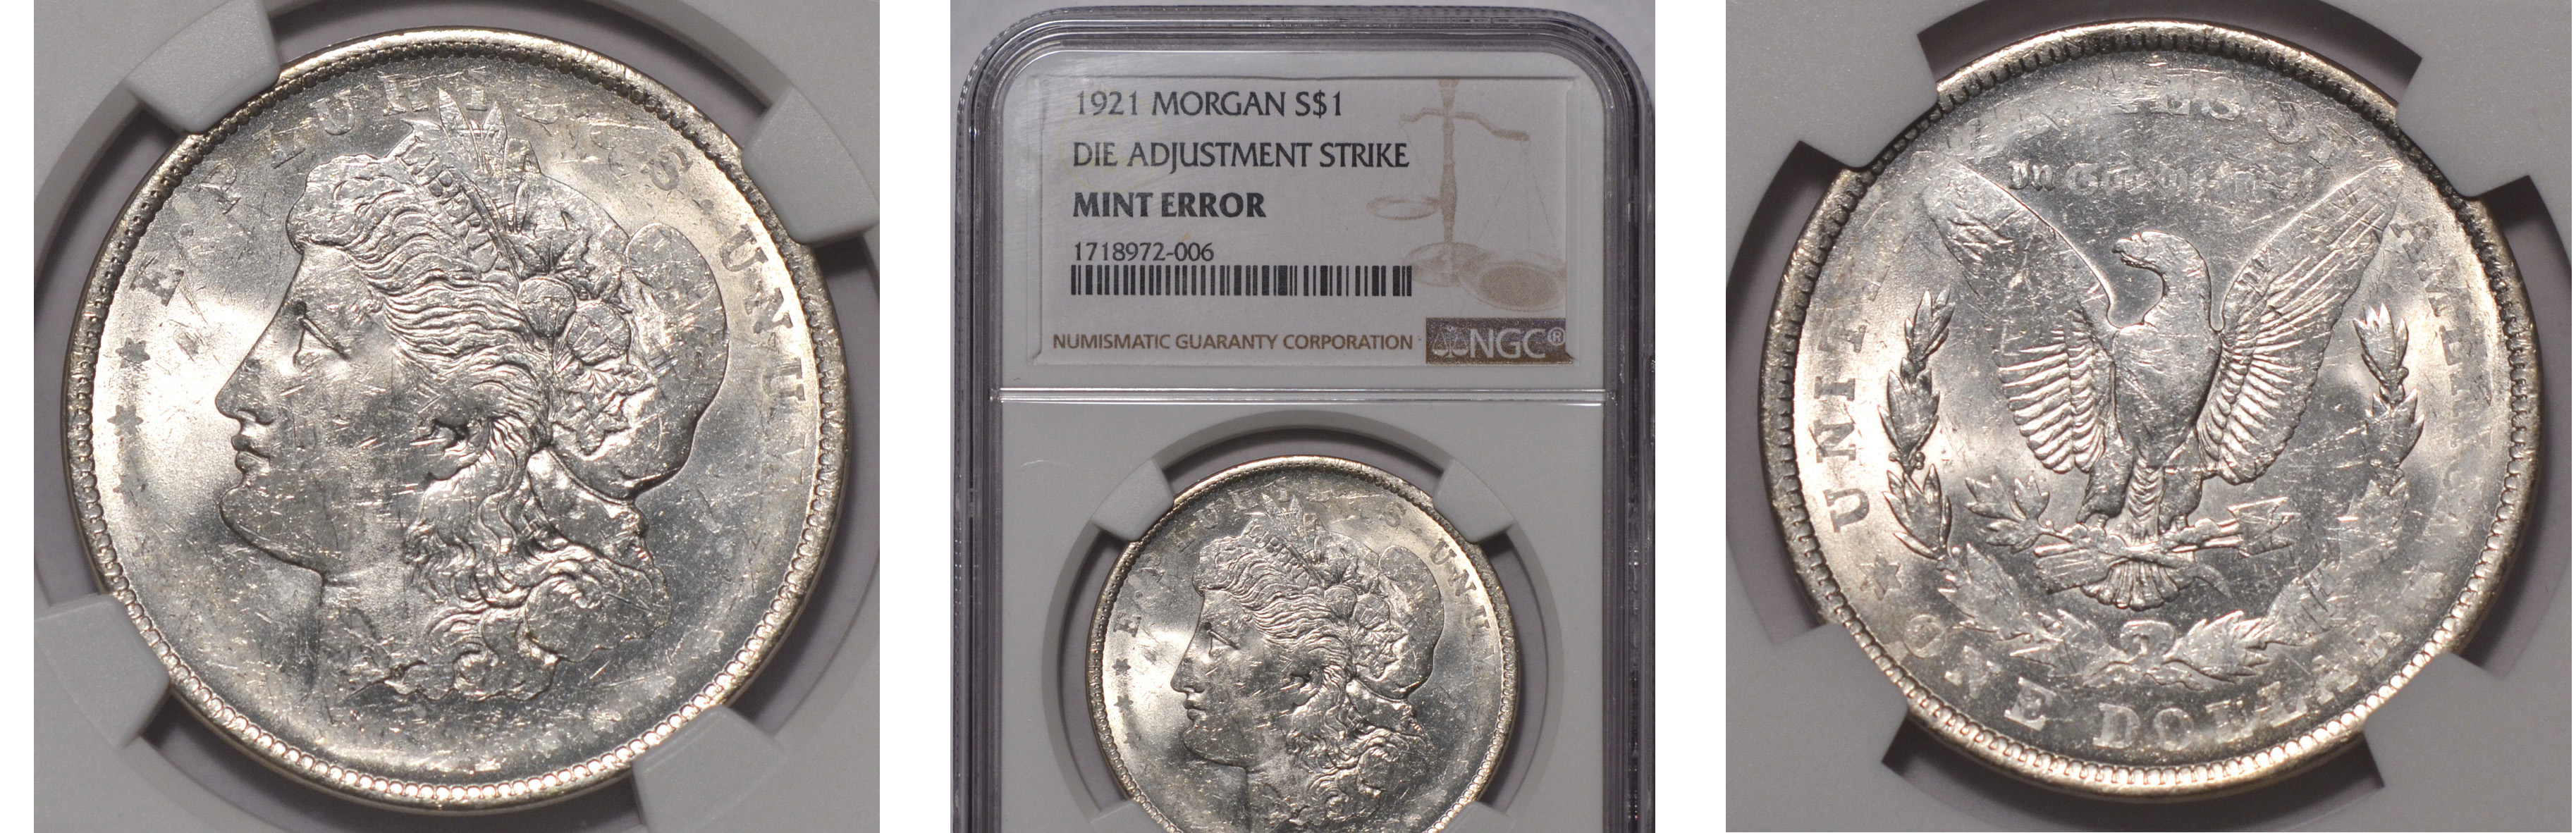 Mint Error 1921 Morgan Dollar NGC